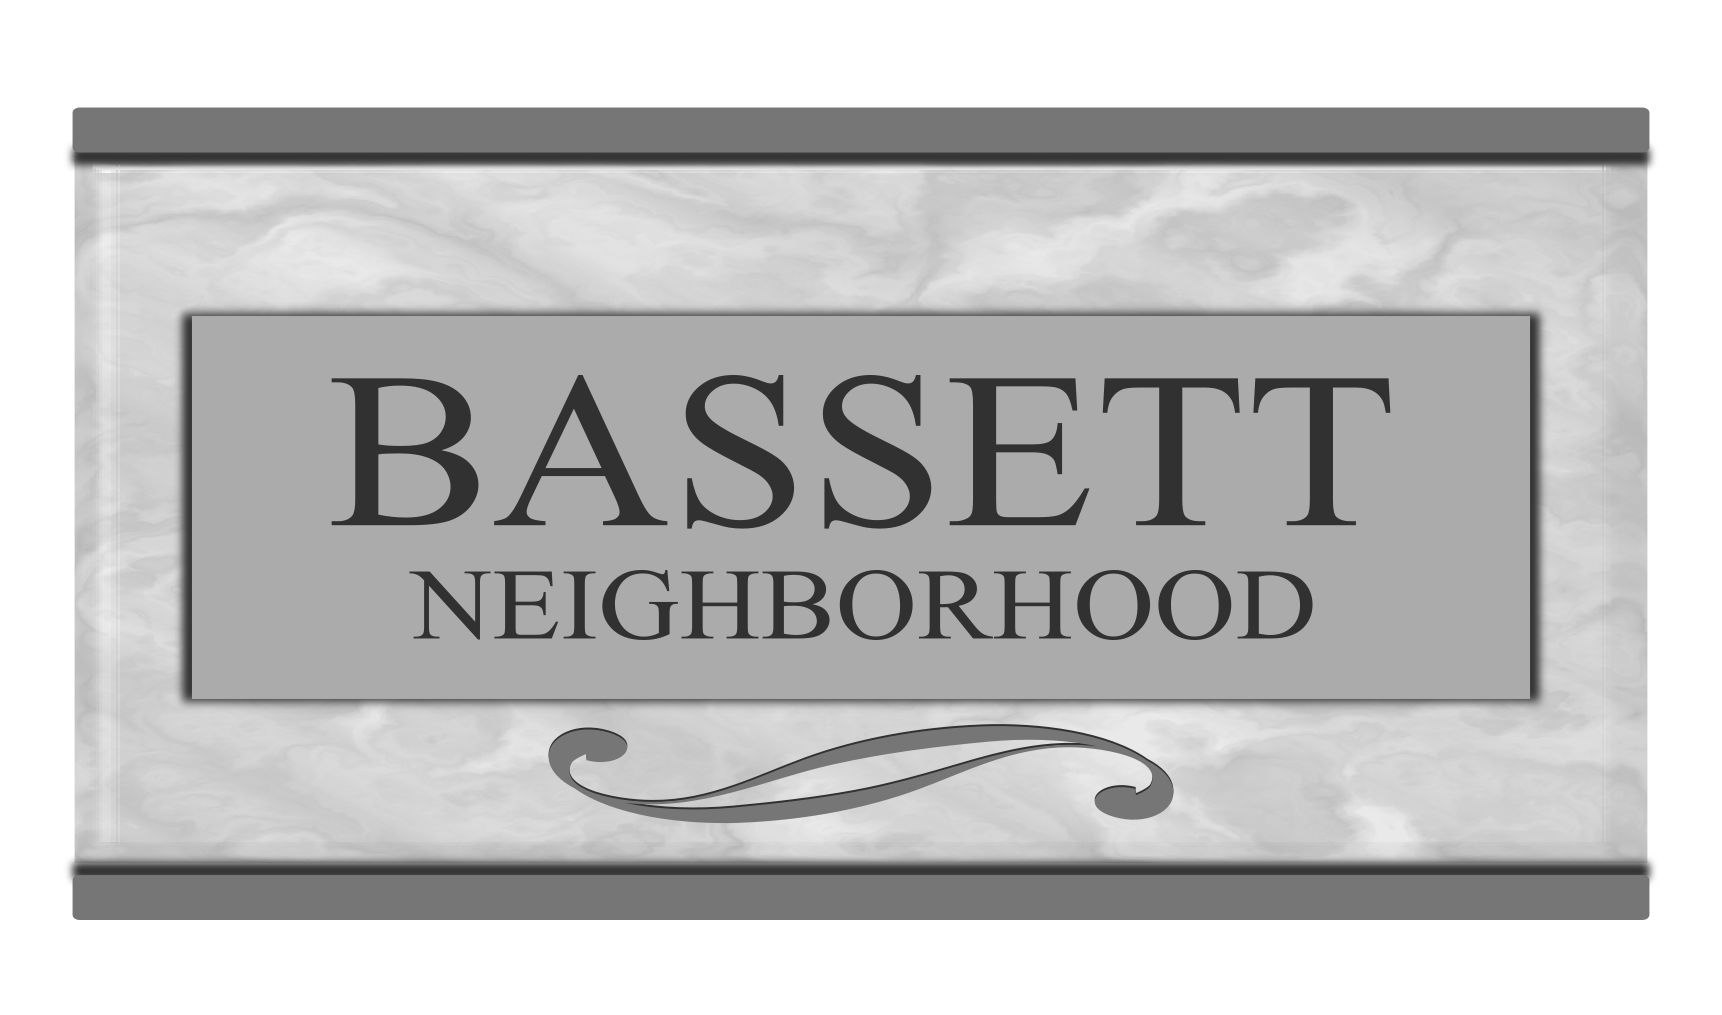 Bustling Bassett Neighborhood Brings Benefits